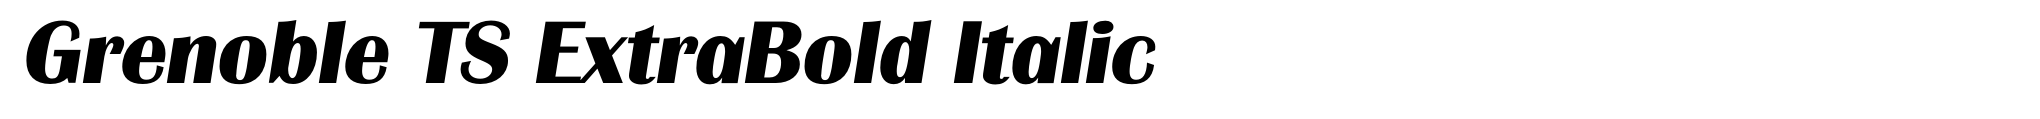 Grenoble TS ExtraBold Italic image